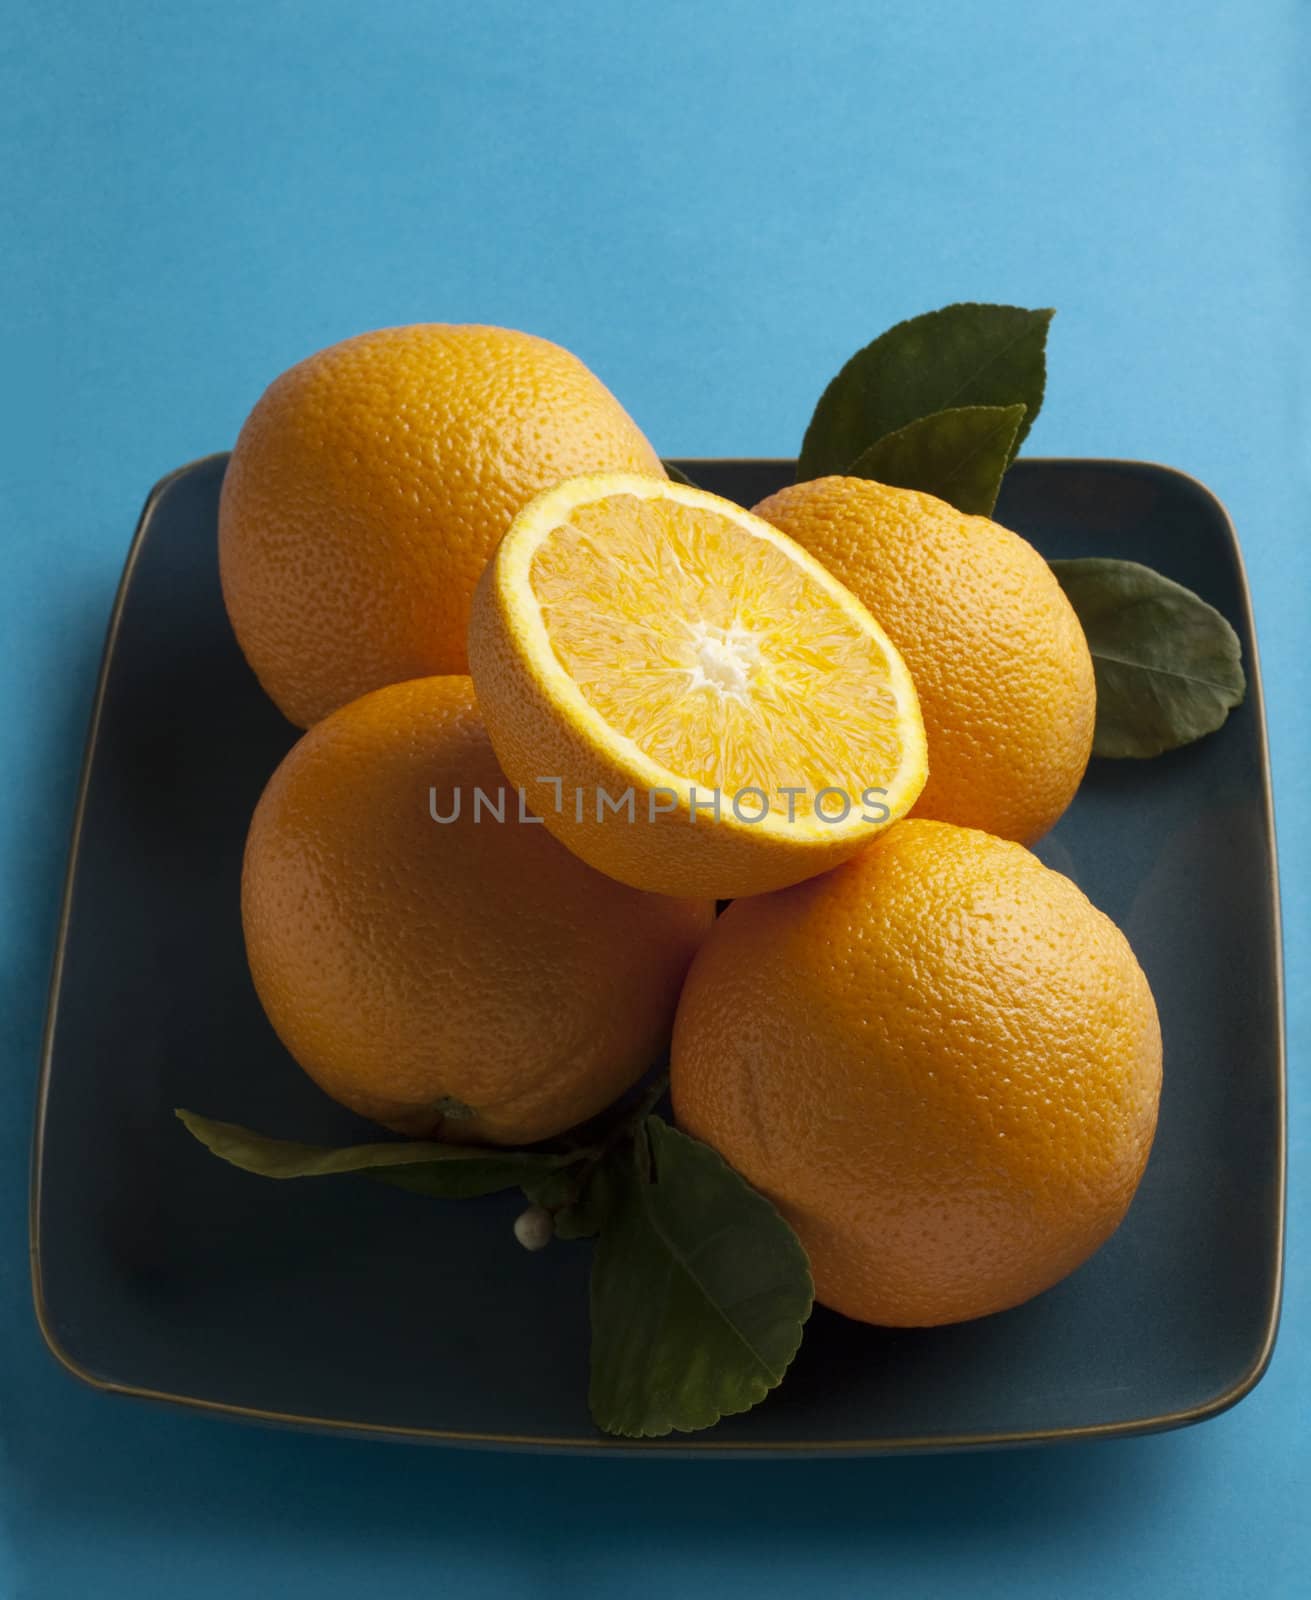 Oranges on blue background